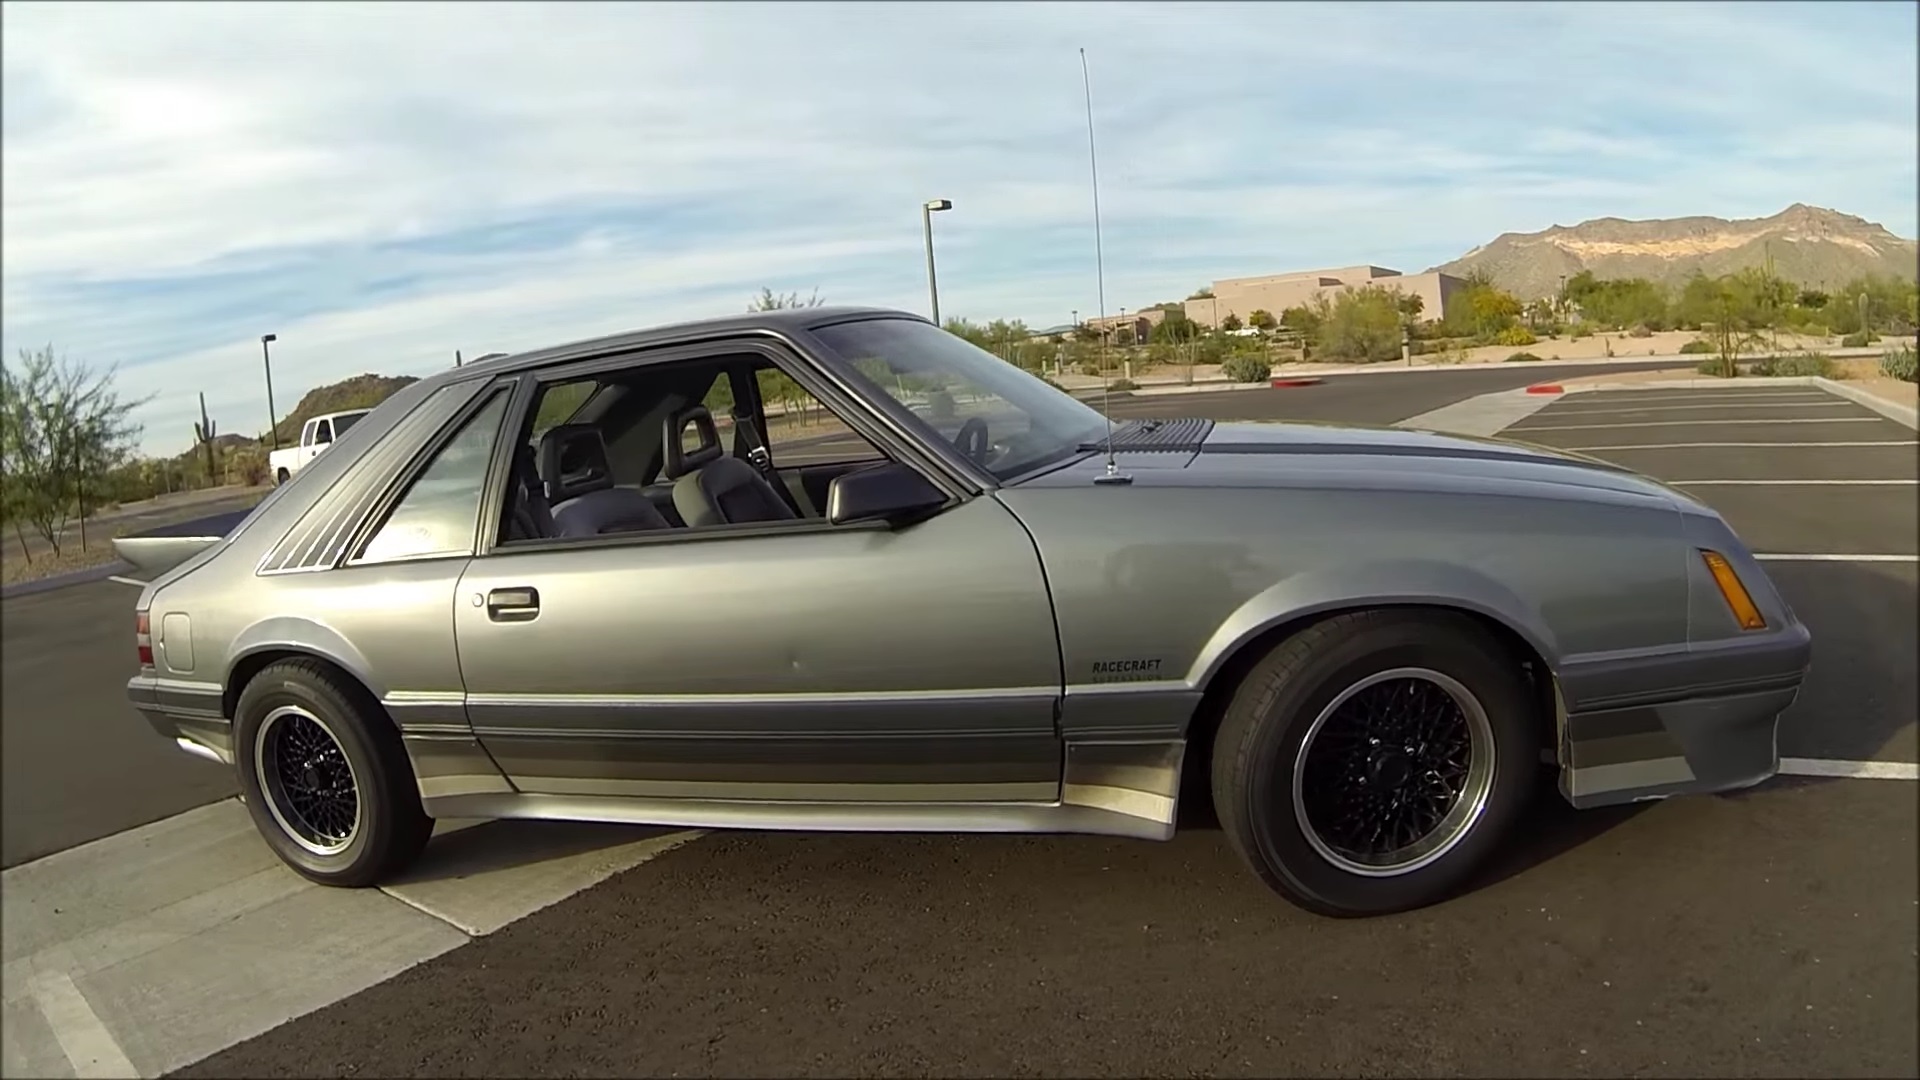 Video: 1985 Saleen Mustang Full Tour + Test Drive